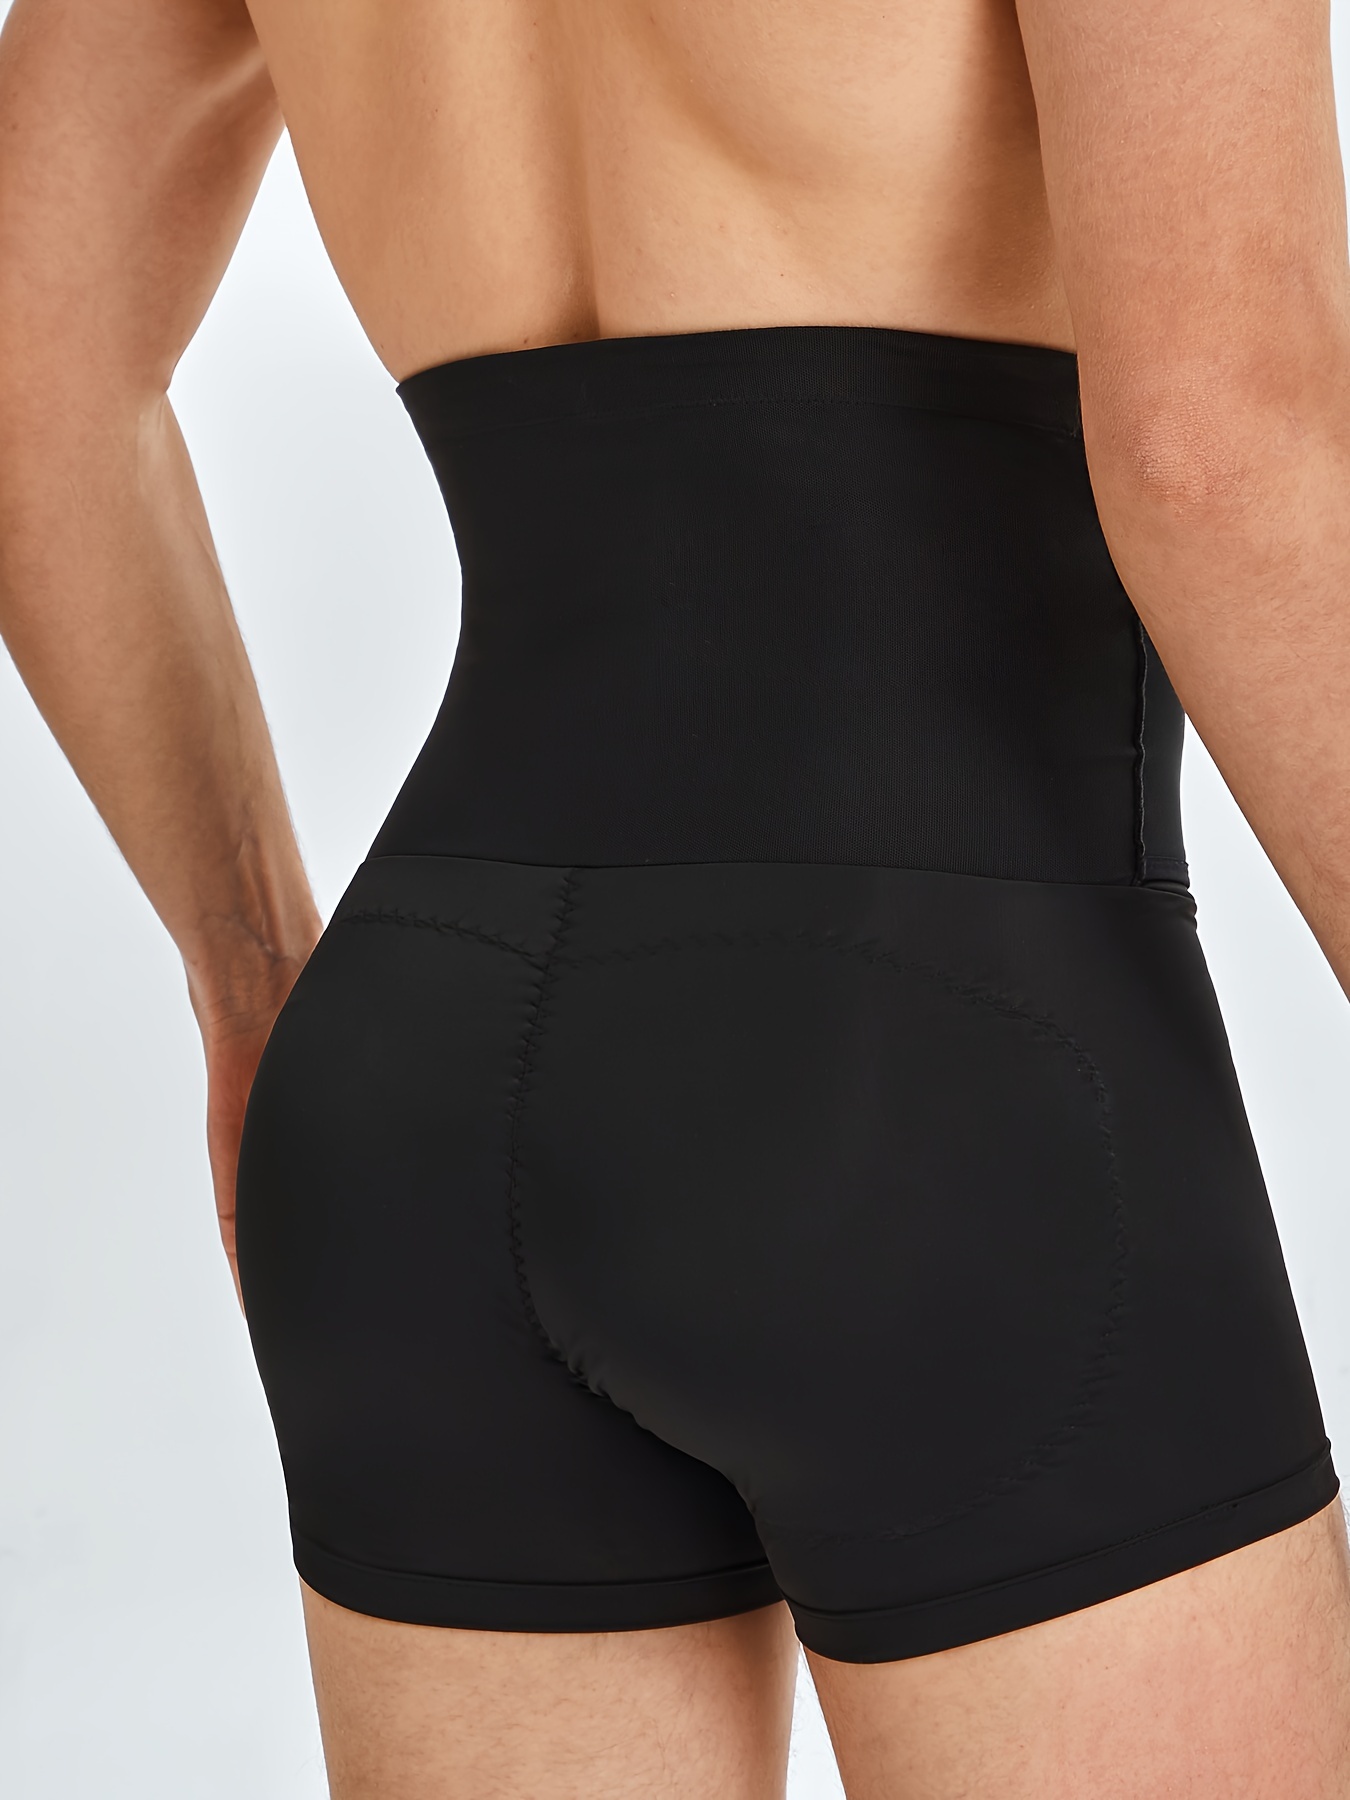 CtriLady Women's Shapewear Butt Lifter Waist Trainer Tummy Control